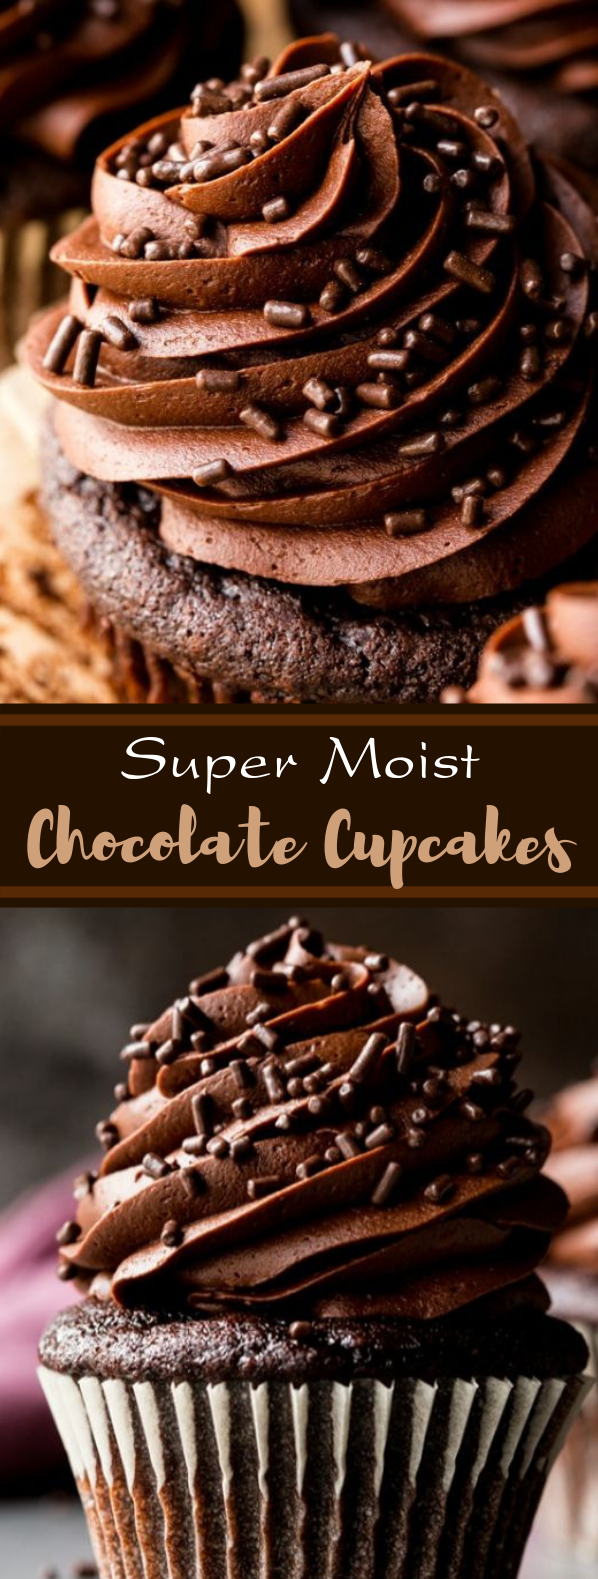 Super Moist Chocolate Cupcakes #dessert #chocolate